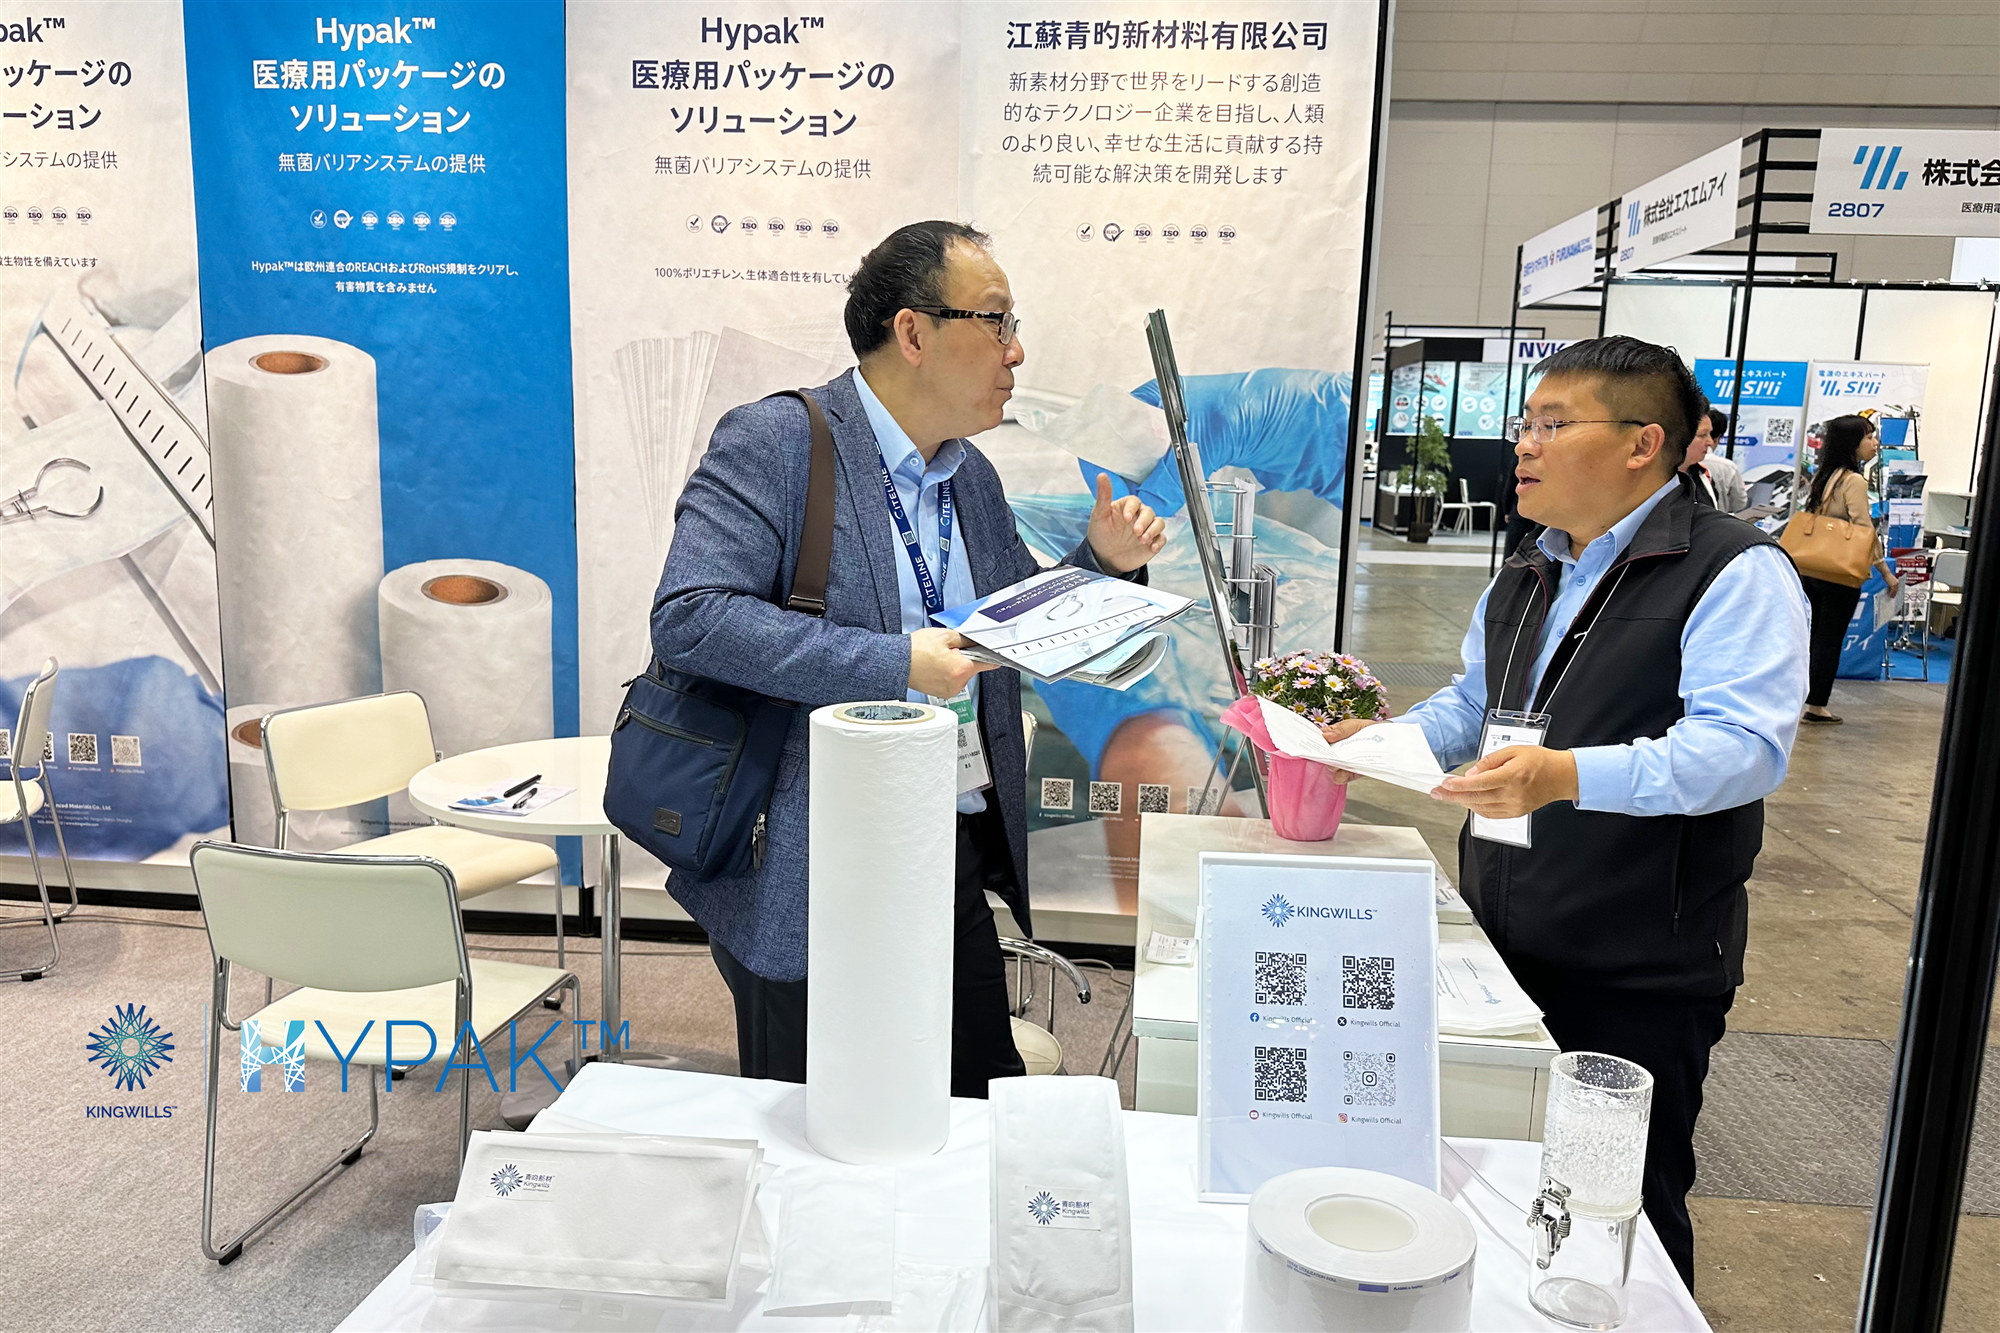 kingwills-unveils-innovative-medical-packaging-solutions-at-medtec-japan-28.jpg